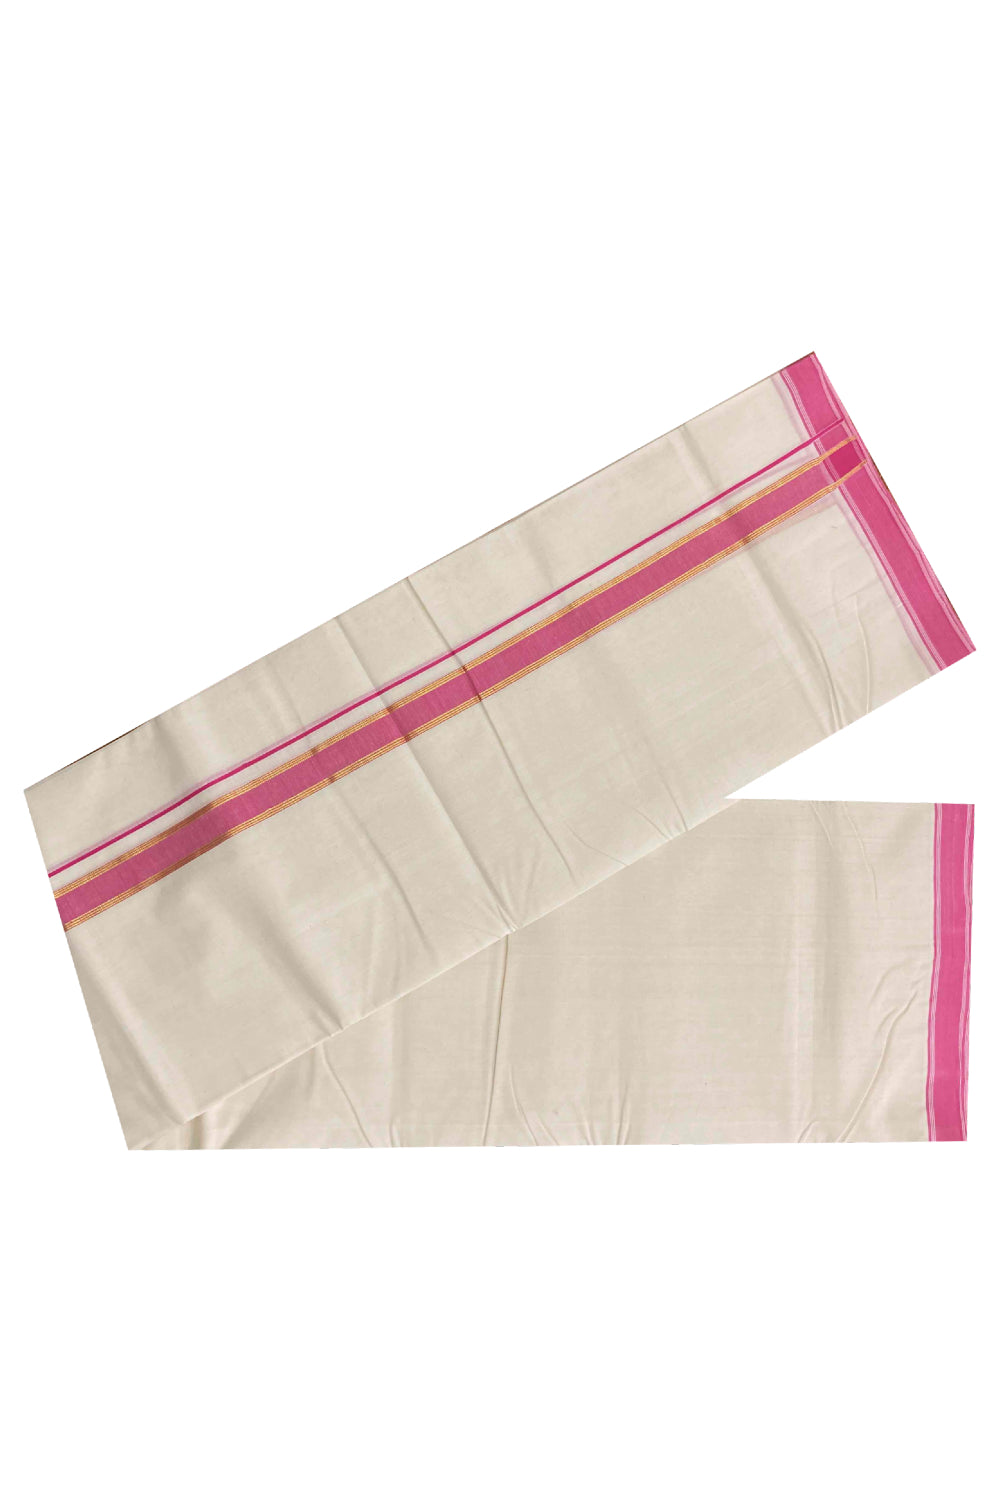 Southloom Handloom Premium Double Dhoti with Dark Pink and Kasavu Border